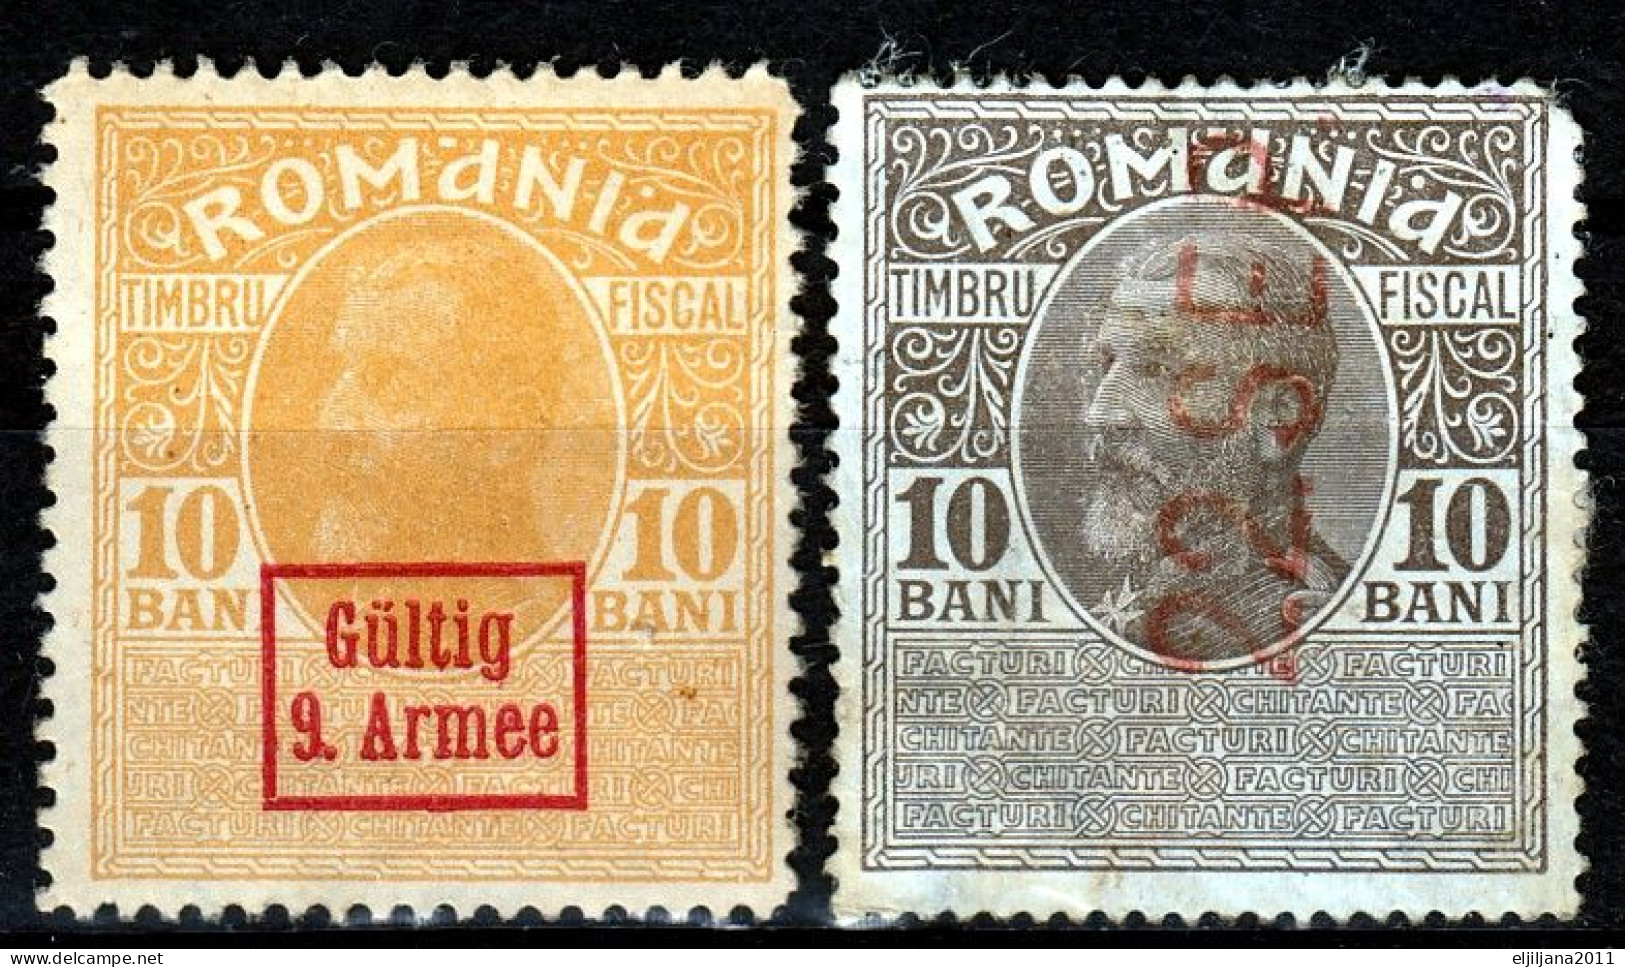 ⁕ Romania 1917 - 1918 Rumänien WWI ⁕ German Occupation "Gültig 9. Armee" Revenue Fiscal Tax Timbru 10 Bani ⁕ 2v MNH & MH - Foreign Occupations